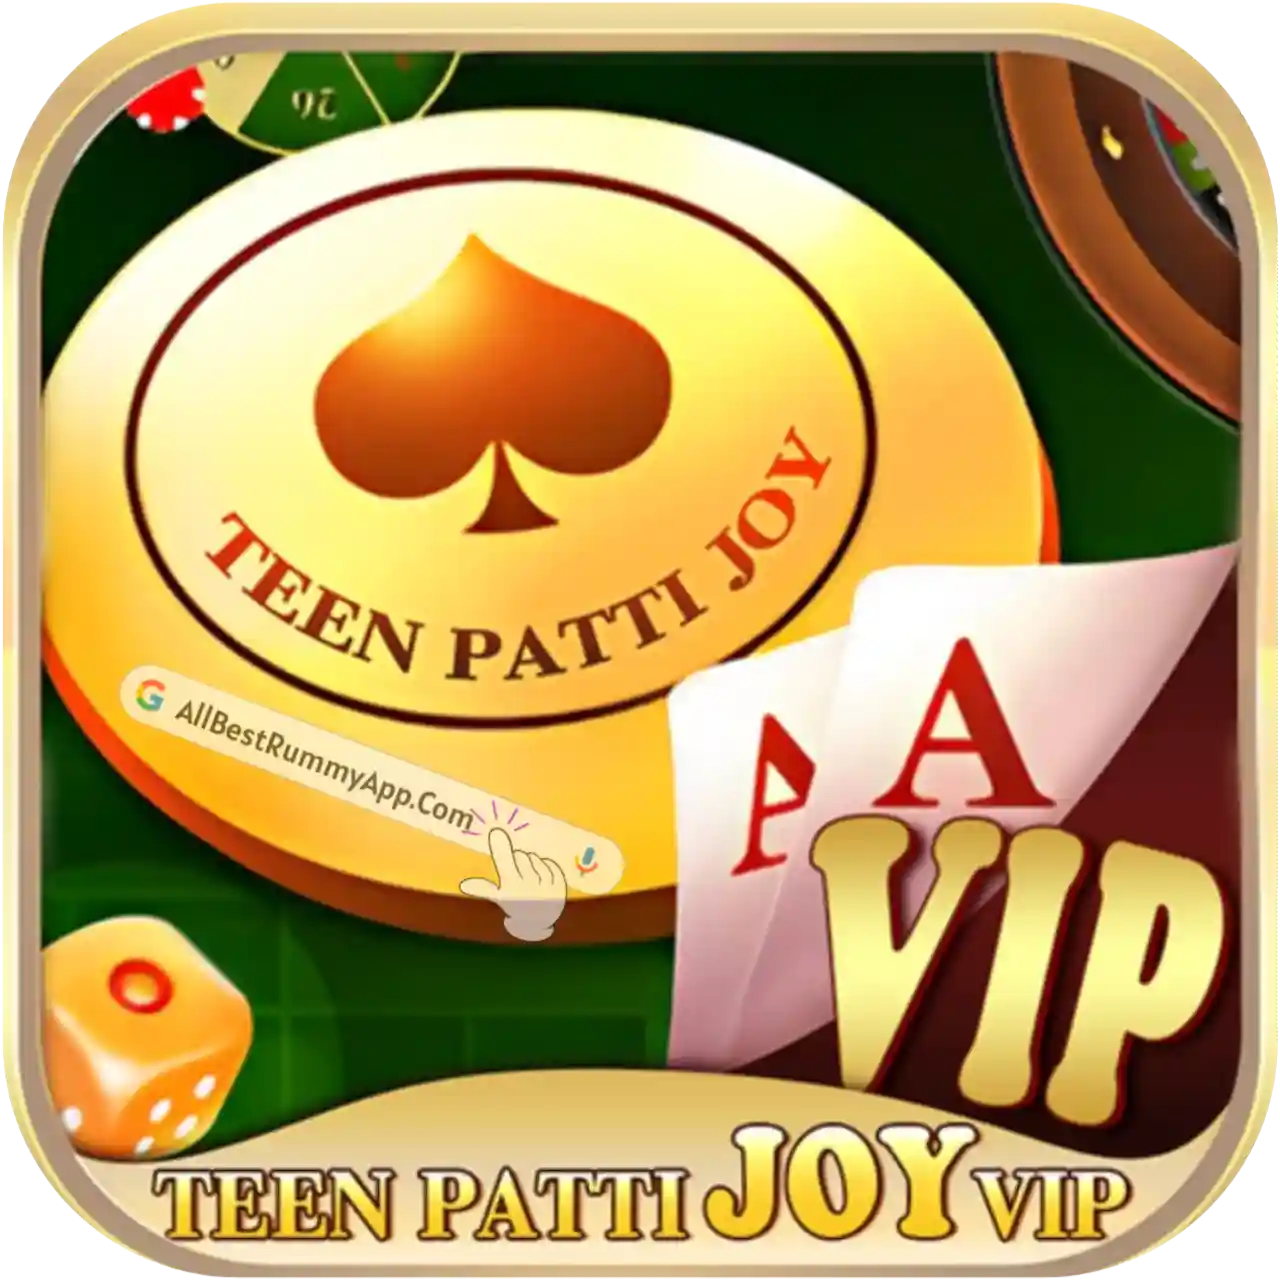 Teen Patti Joy APK - All Best Rummy App